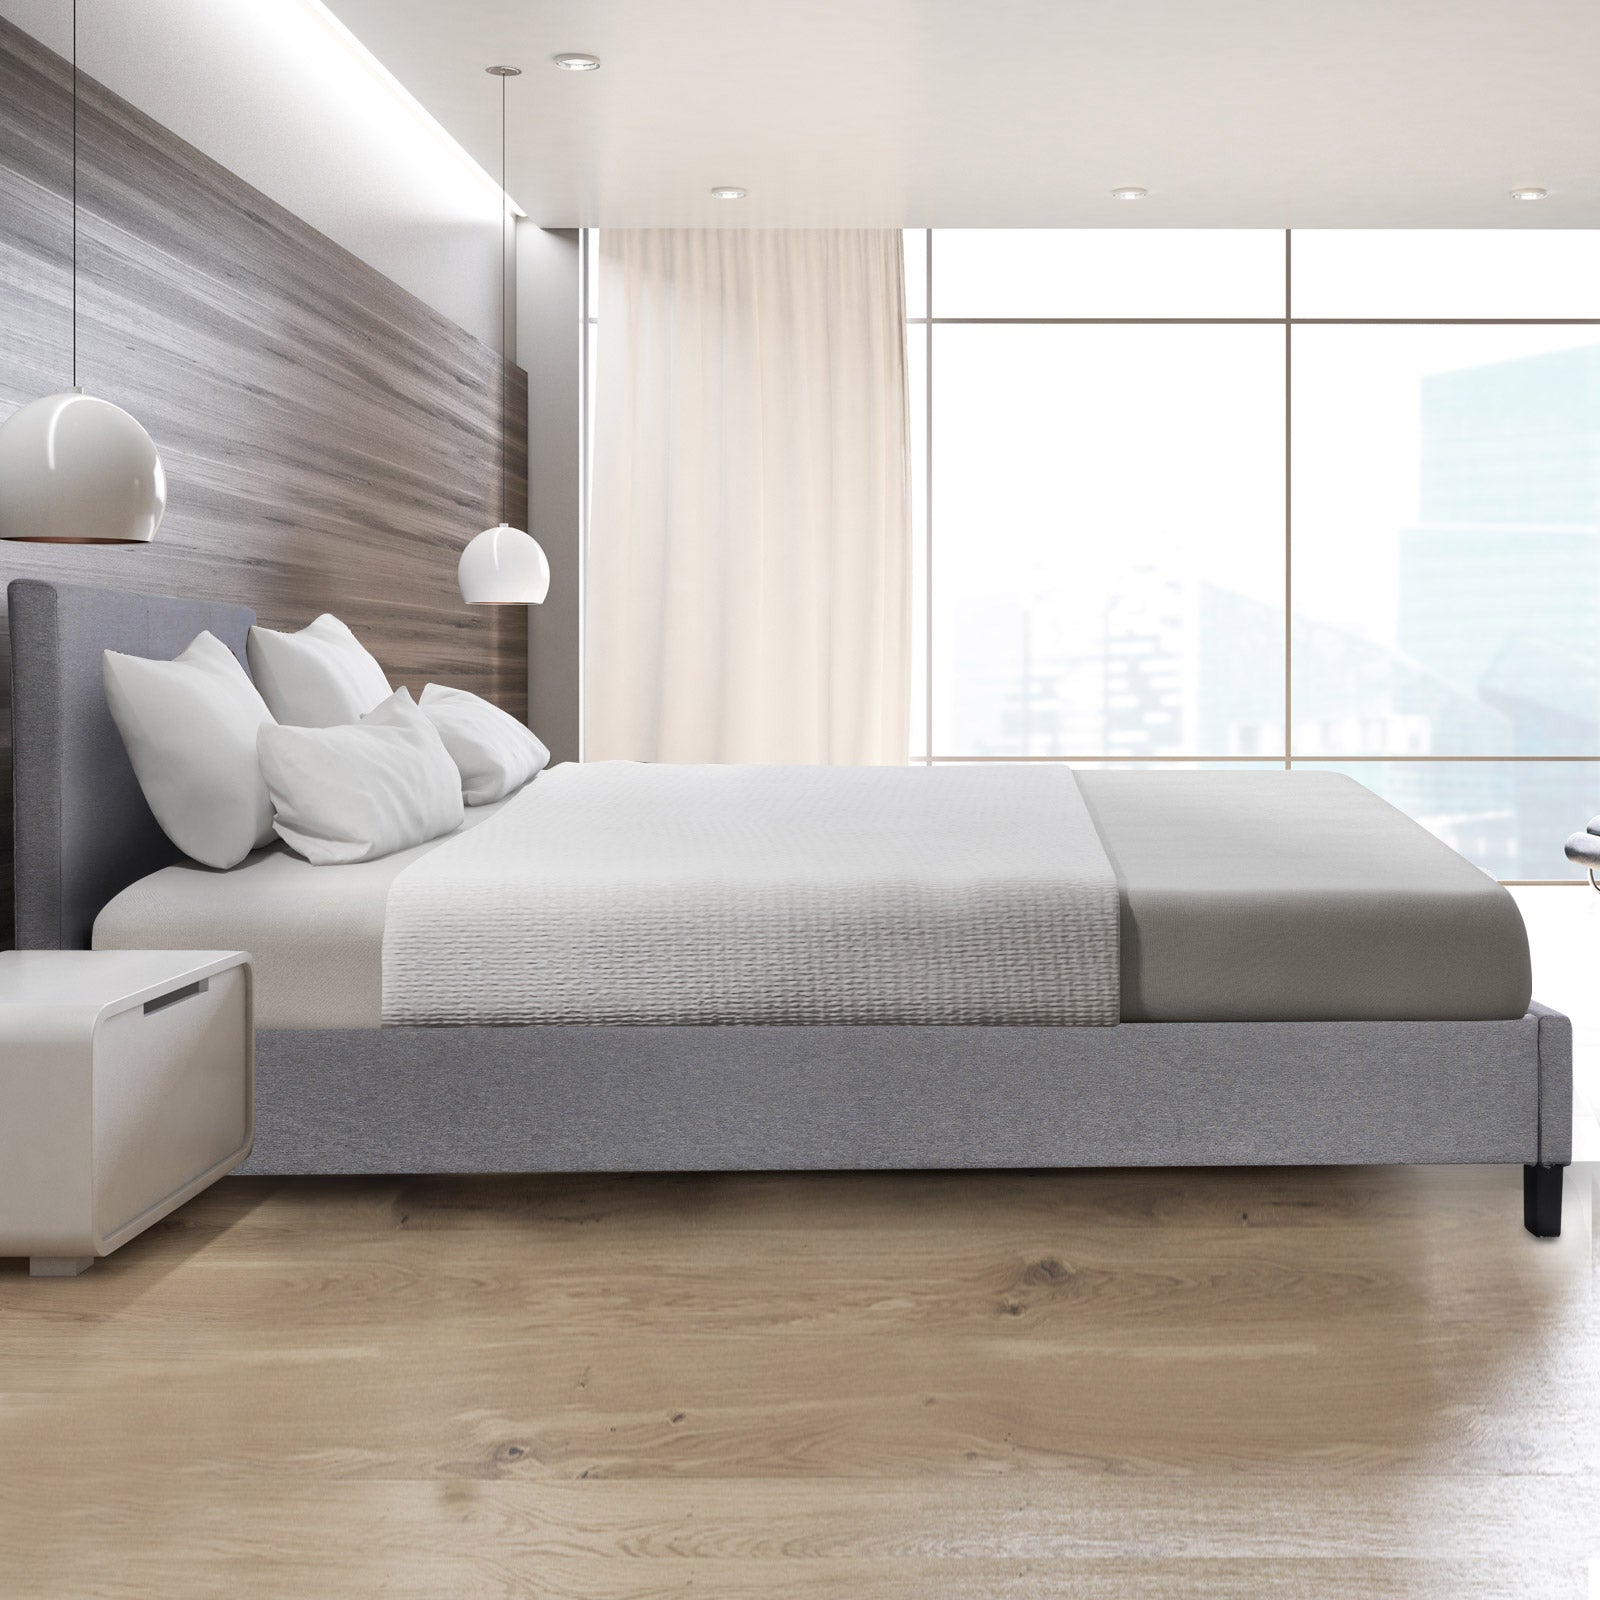 Milano Sienna Luxury Bed with Headboard (Model 2) - Grey No.28 - Queen